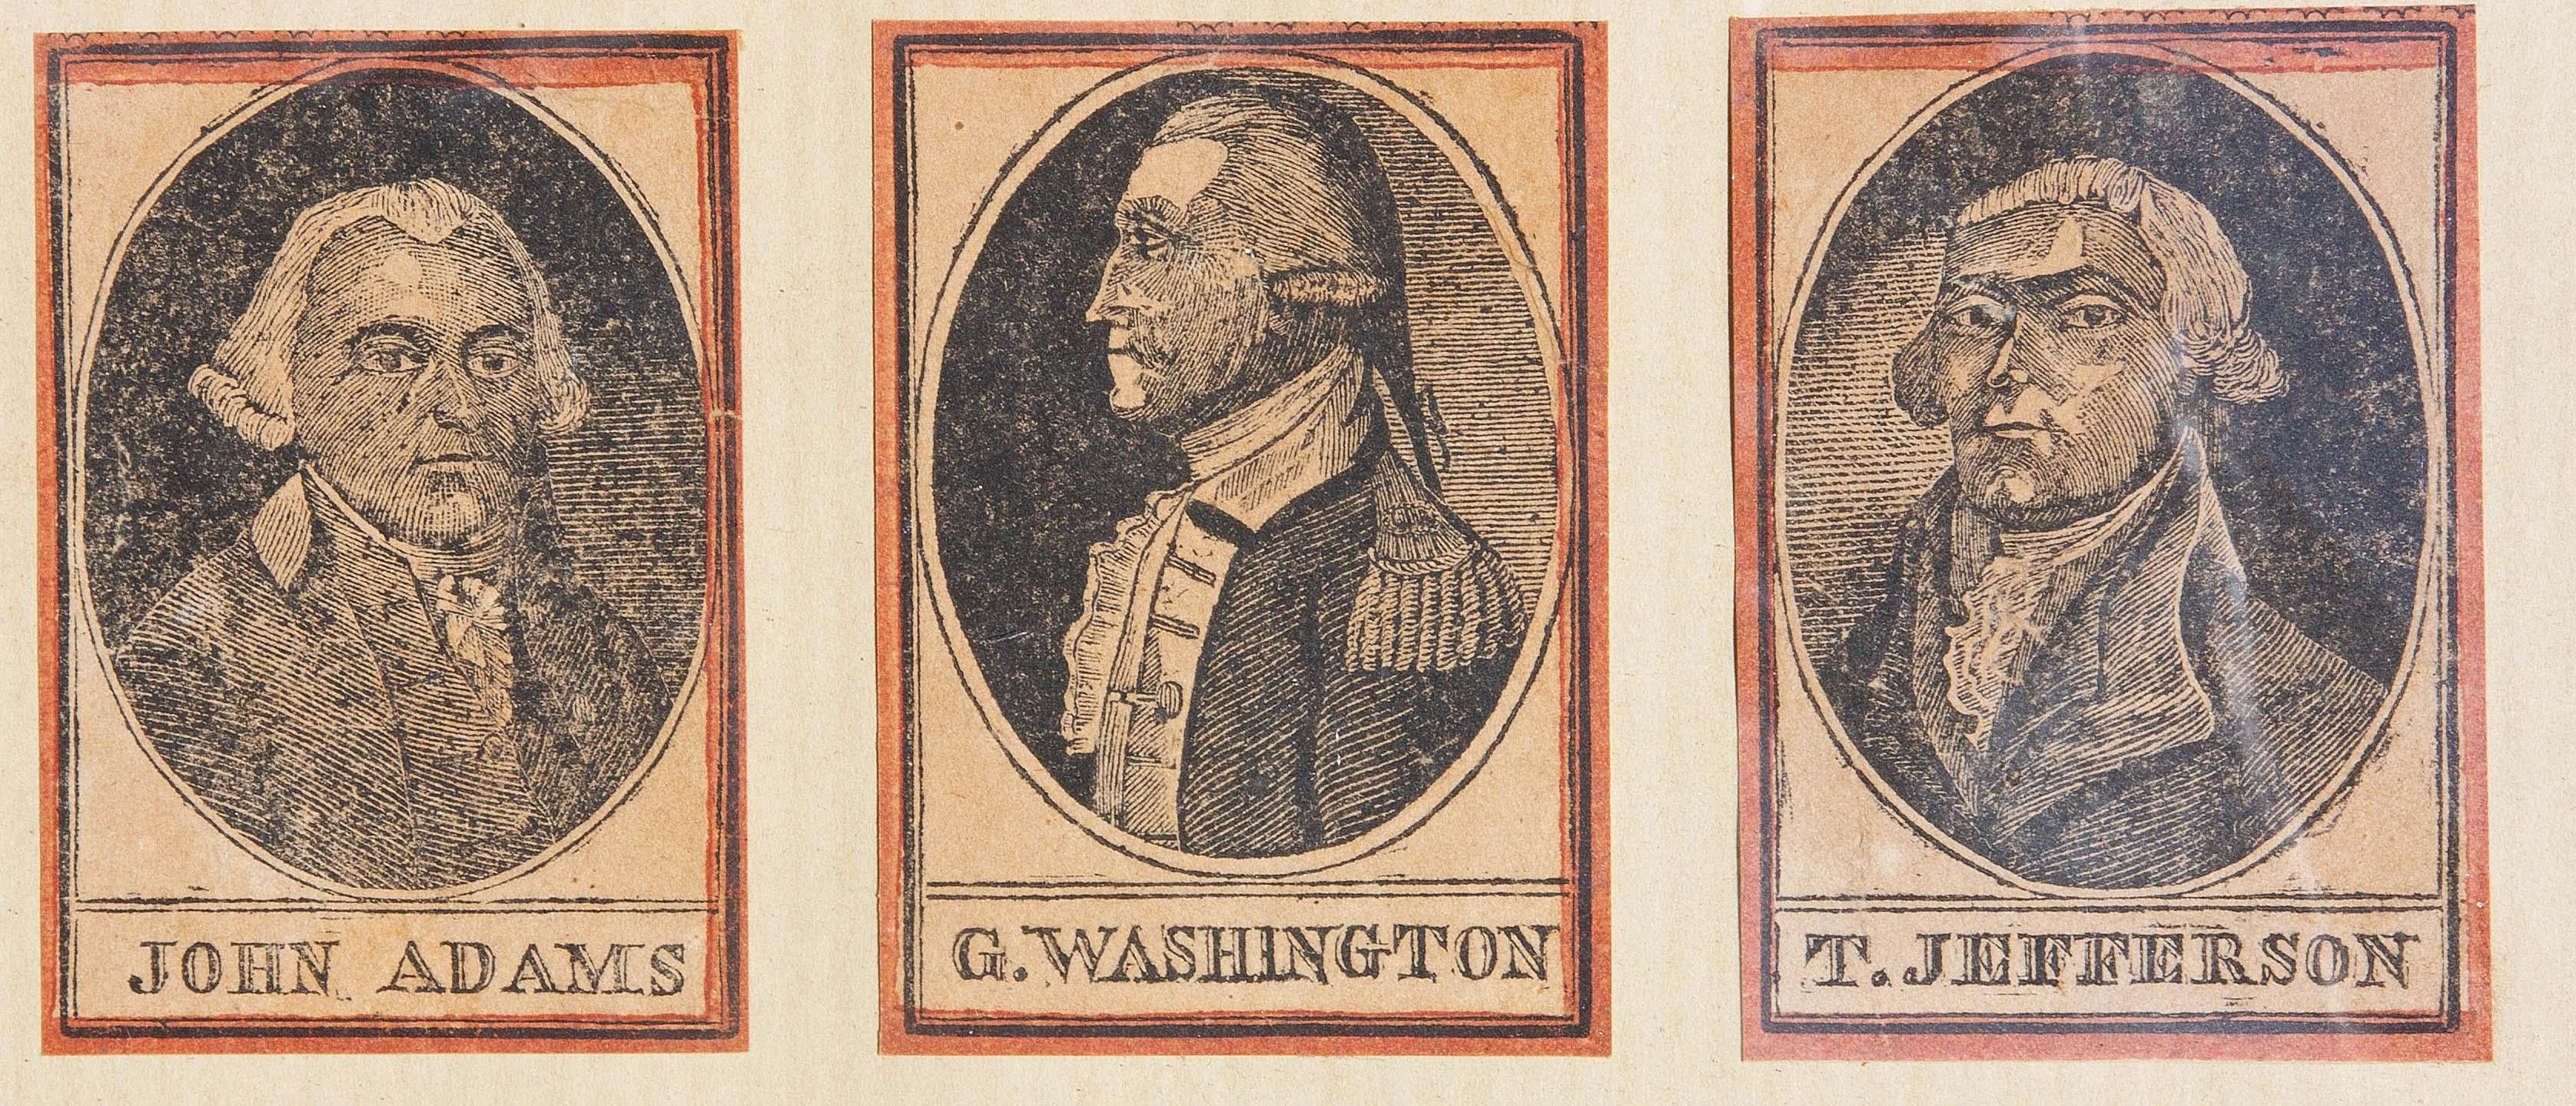 Three 18th century engravings of George Washington, Thomas Jefferson, and John Adams. Mounted on paper. Each engraving measures 2.75